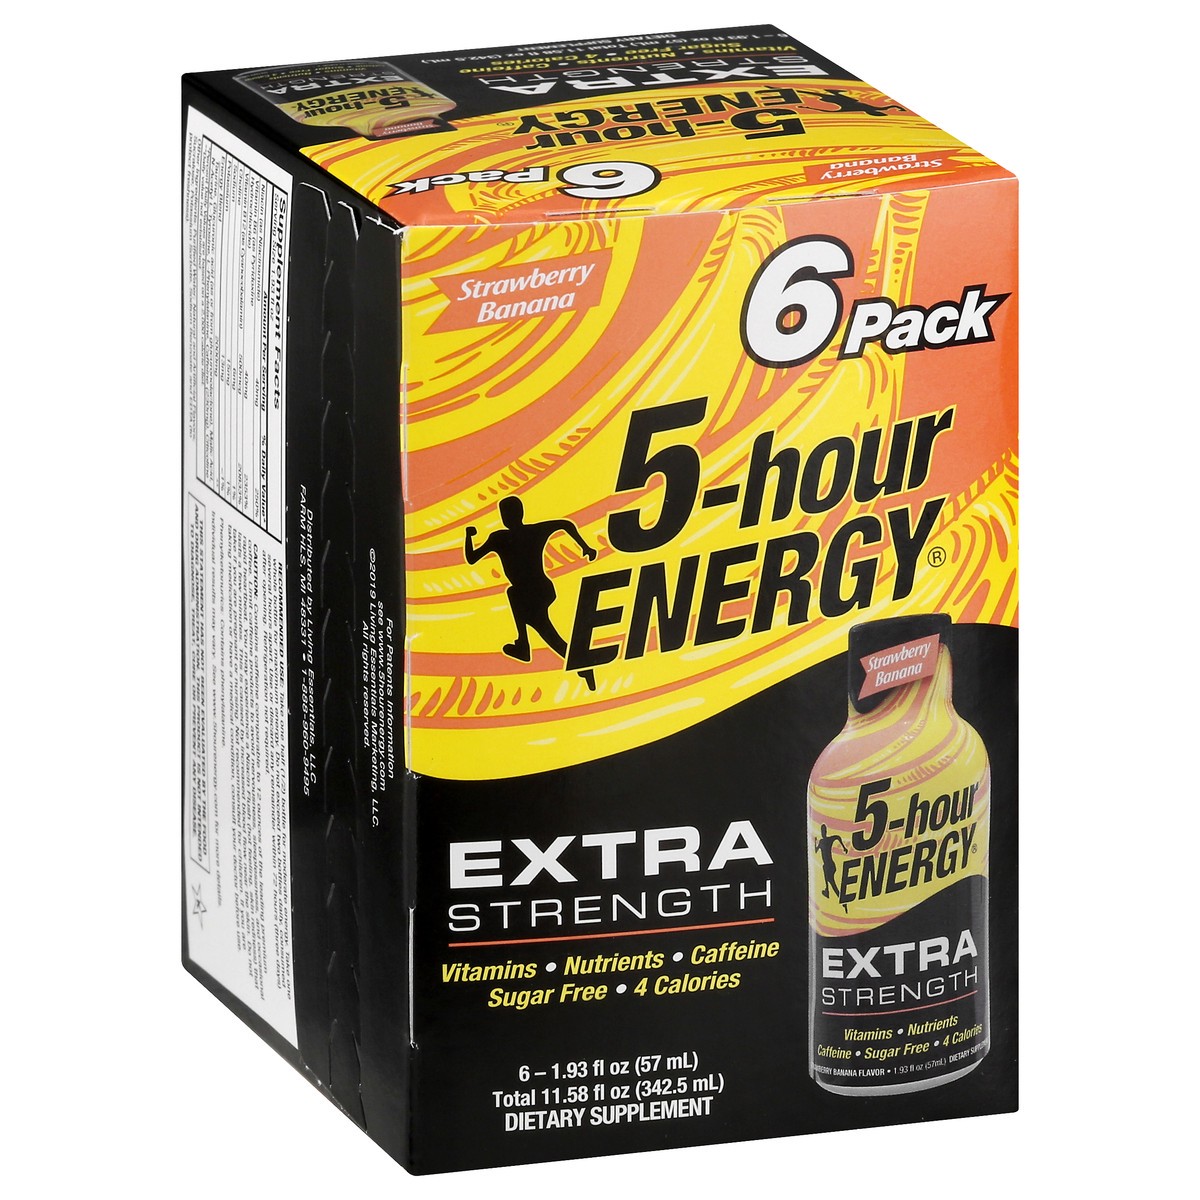 slide 2 of 9, 5-hour Energy, Extra Strength, Strawberry Banana, 6-pack, 6 ct